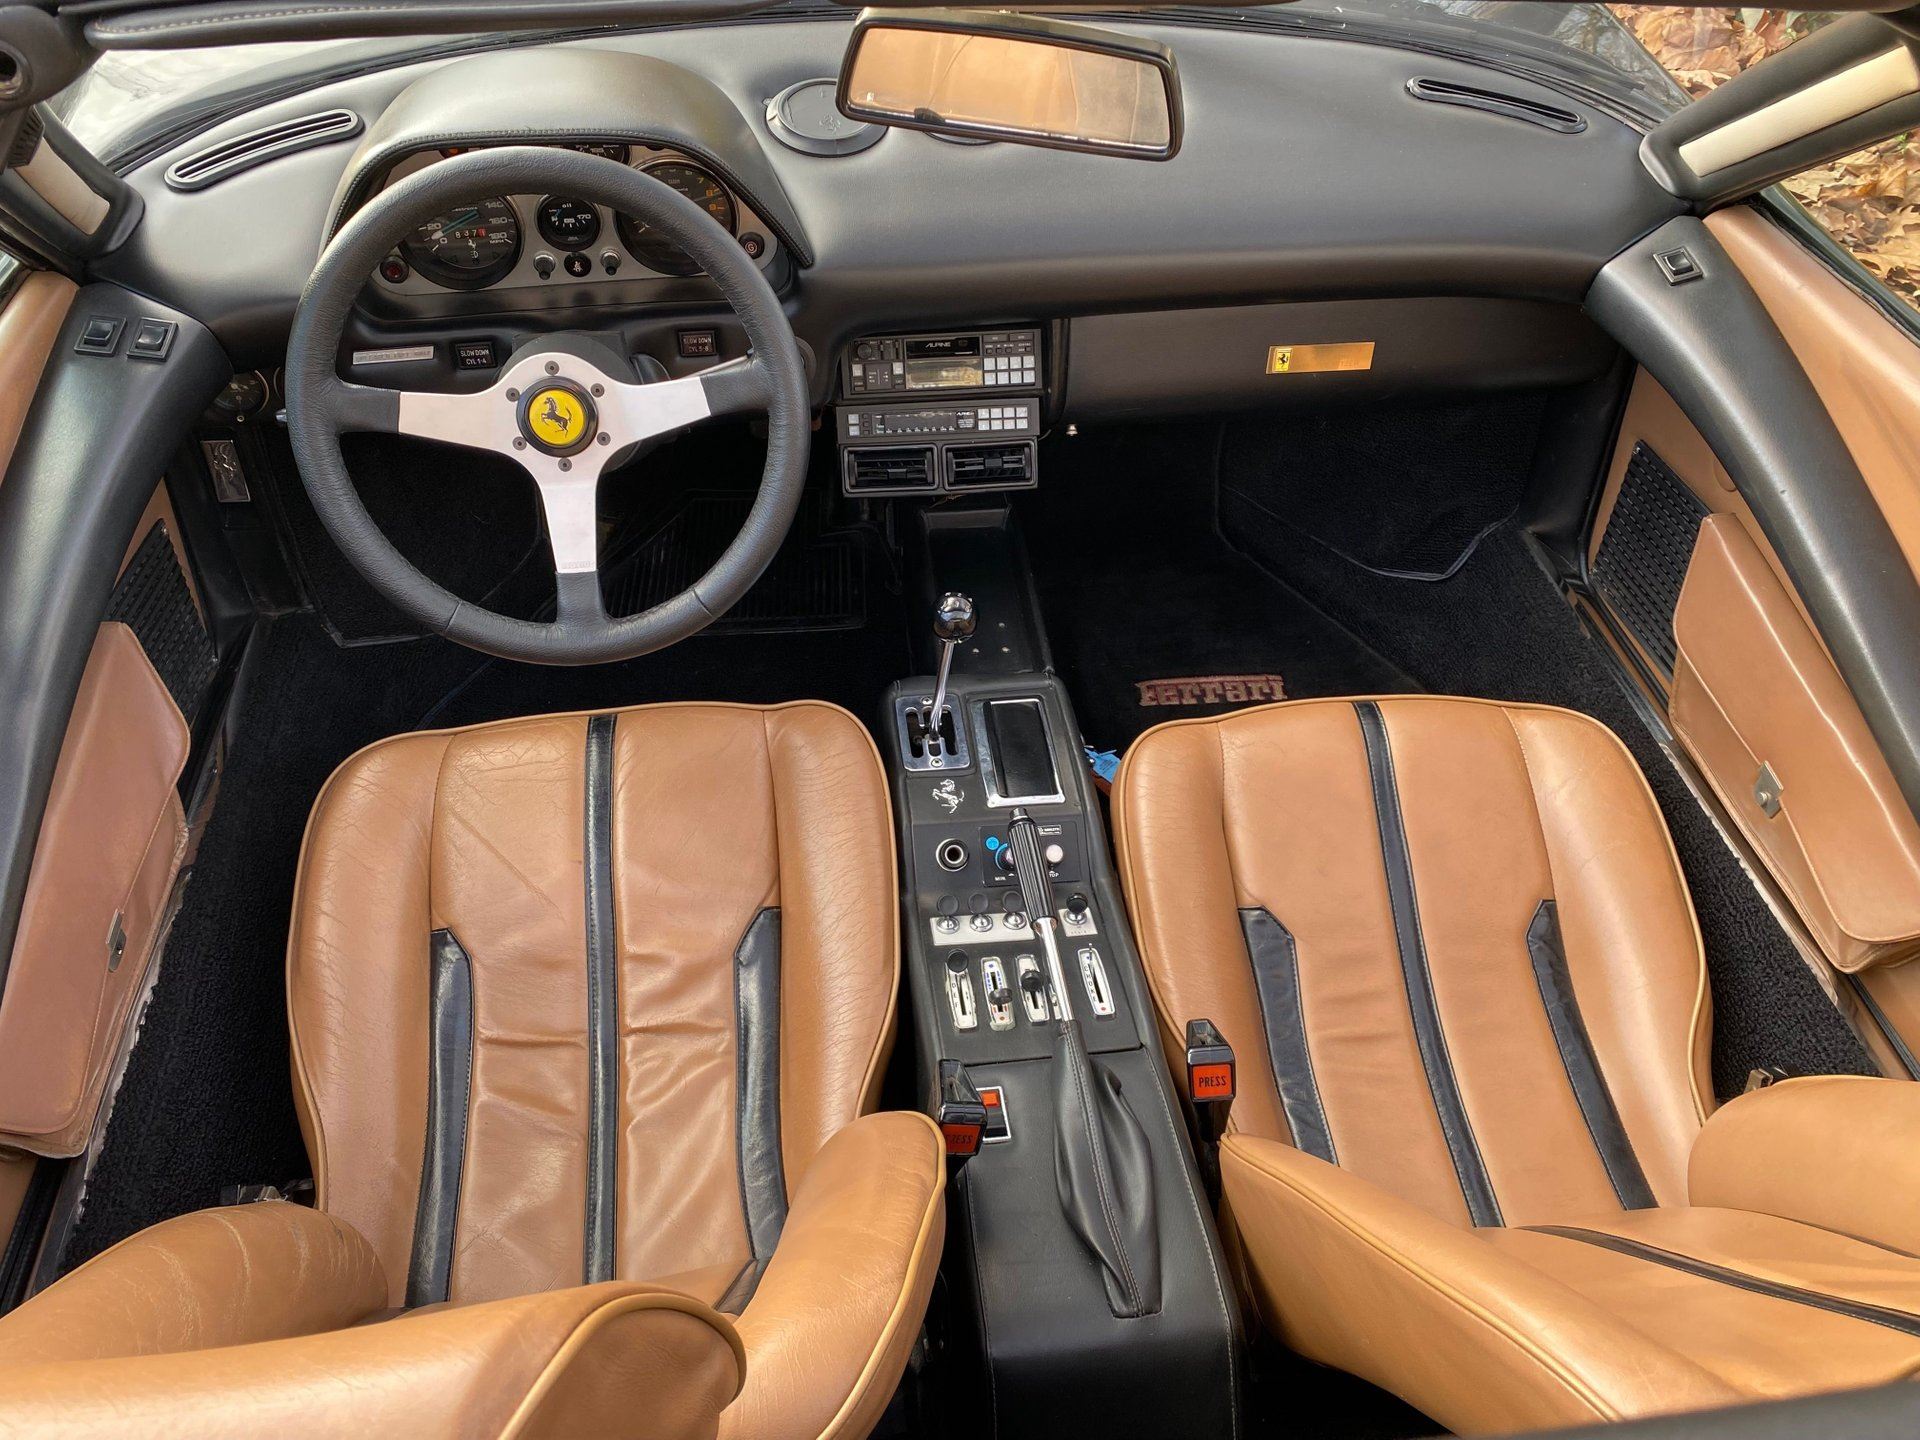 Ferrari 308 gts kfpzt8ydphcg0twlthhgk